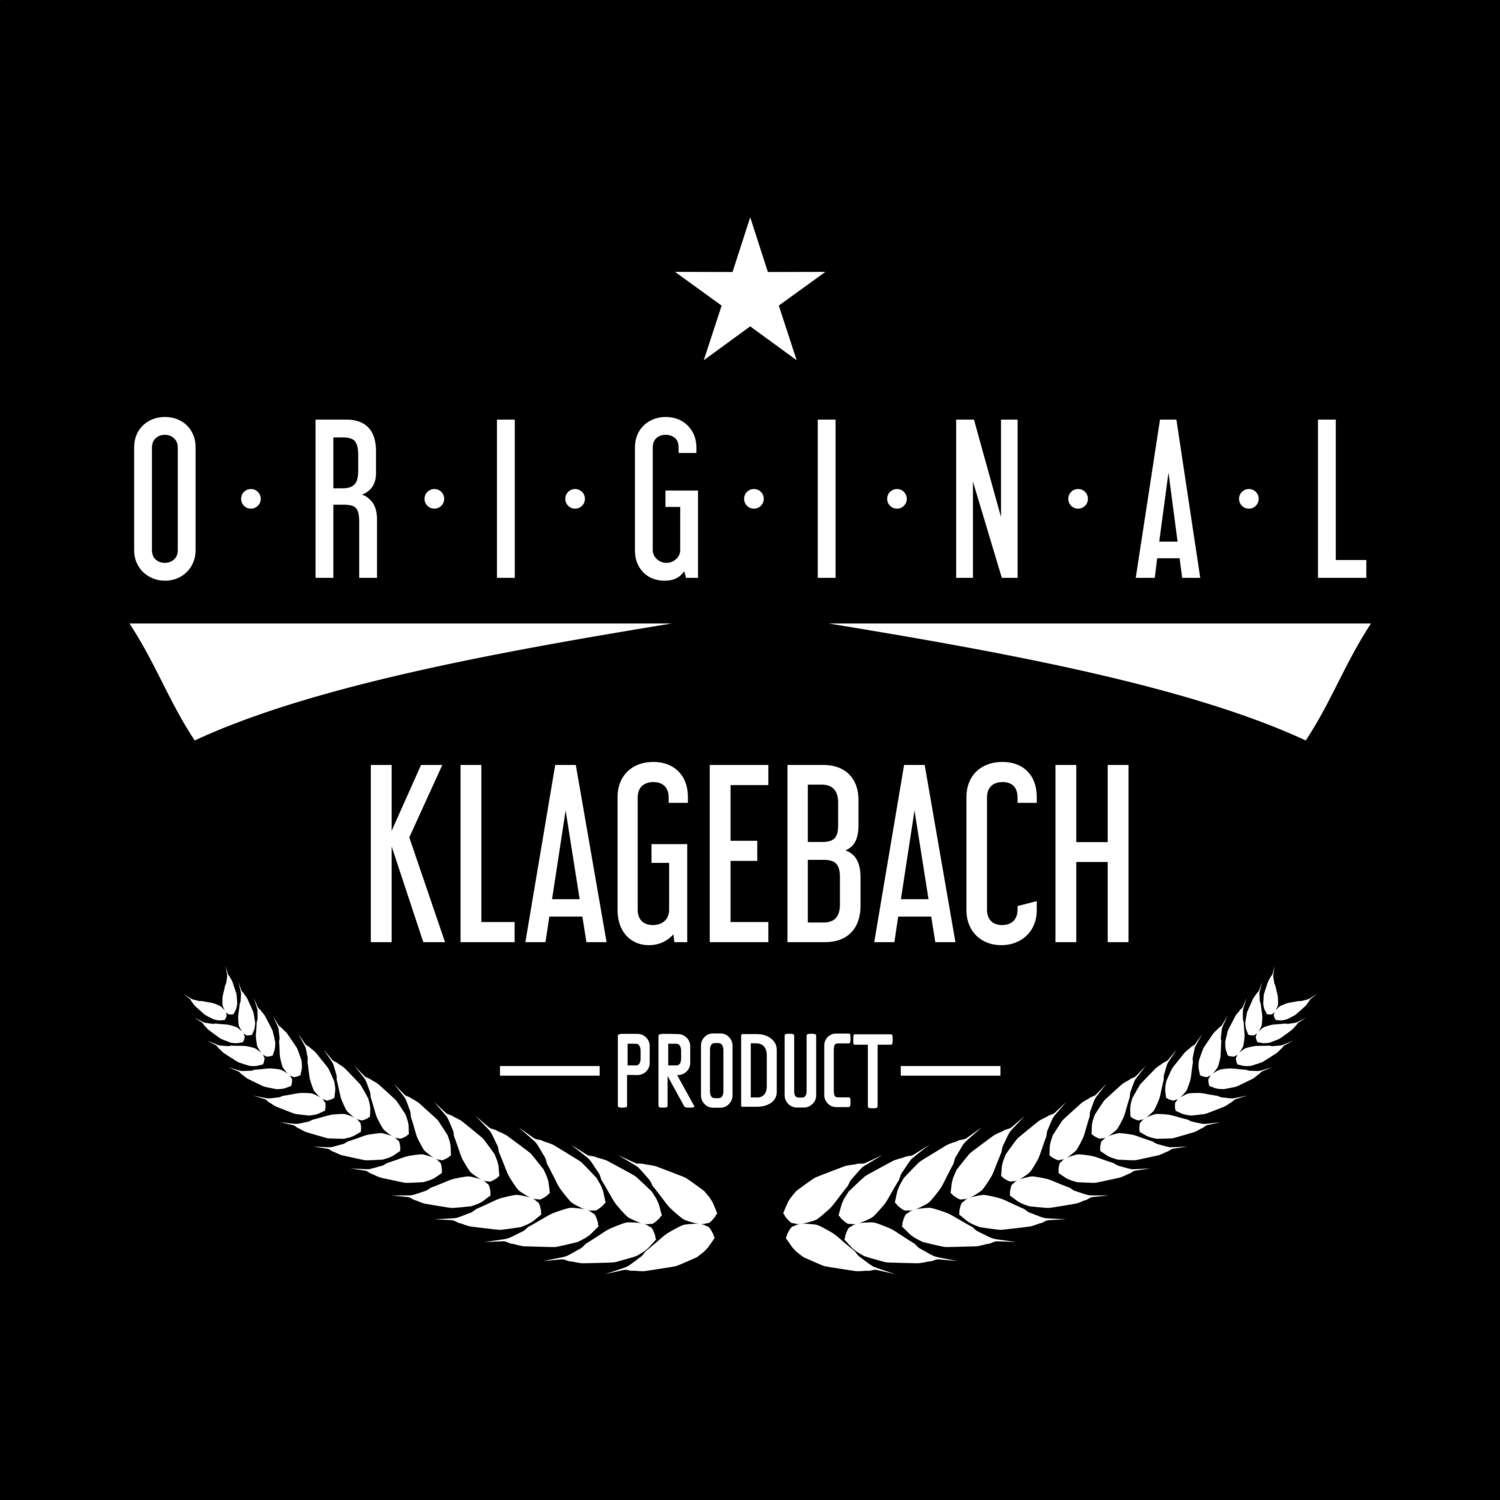 Klagebach T-Shirt »Original Product«